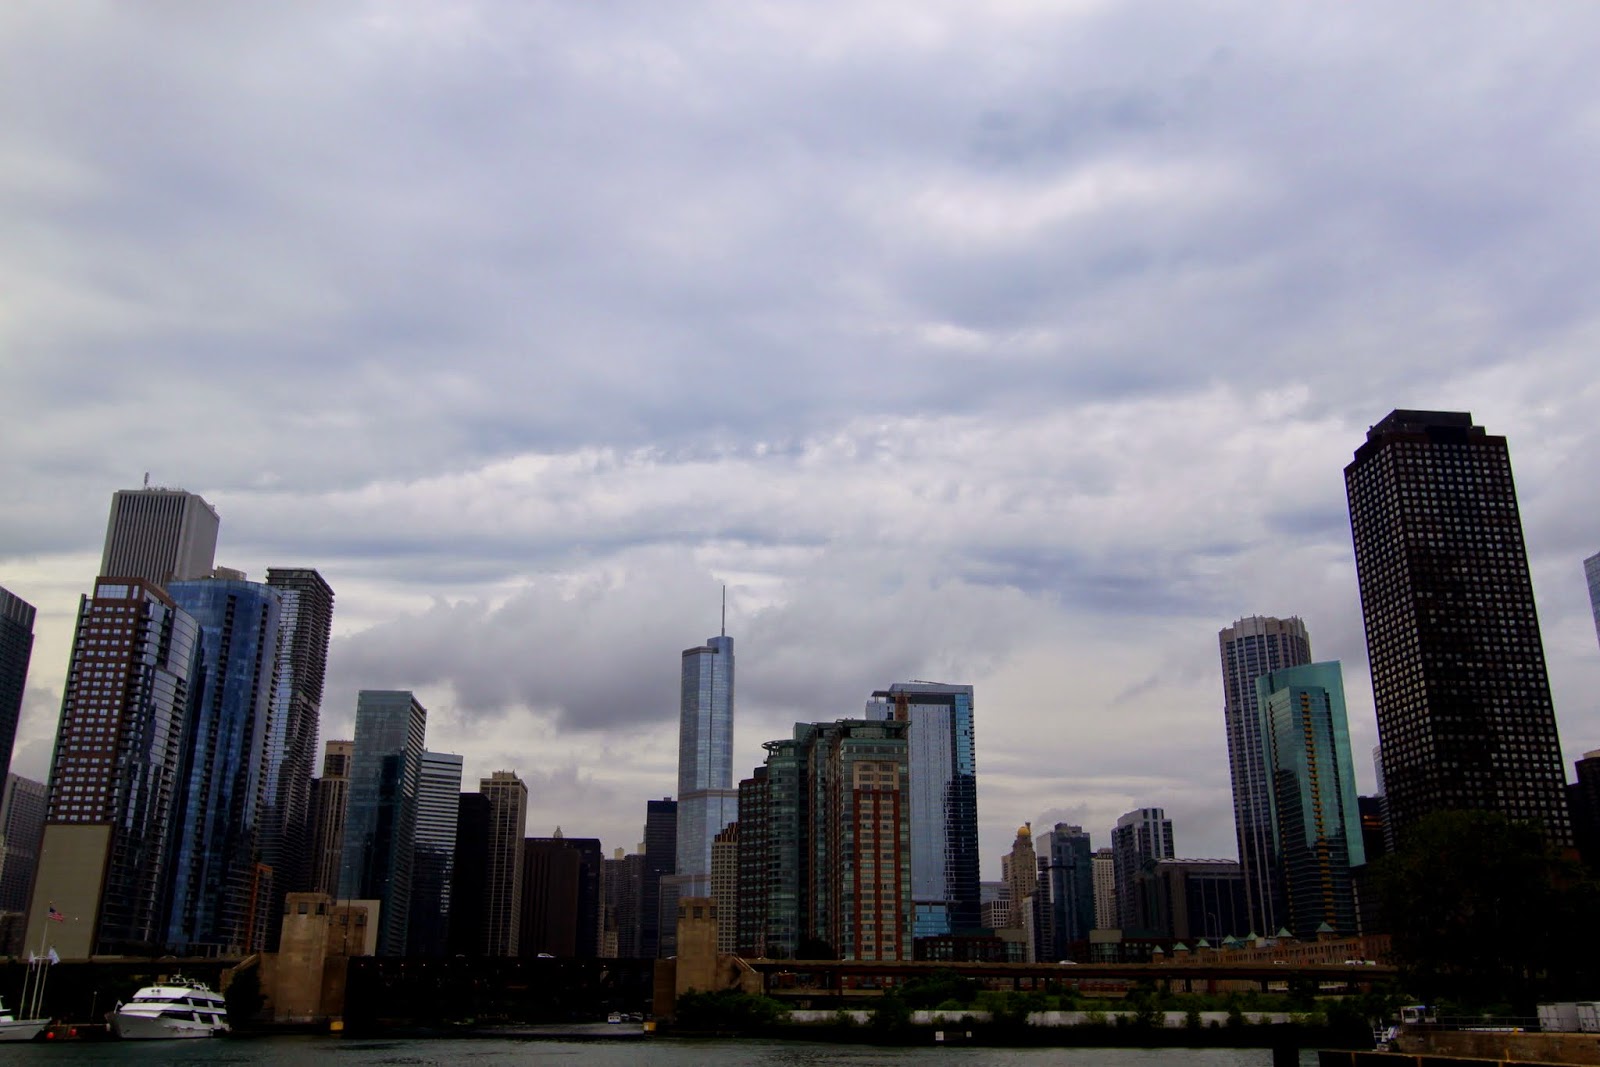 Chicago River Architectural Tour